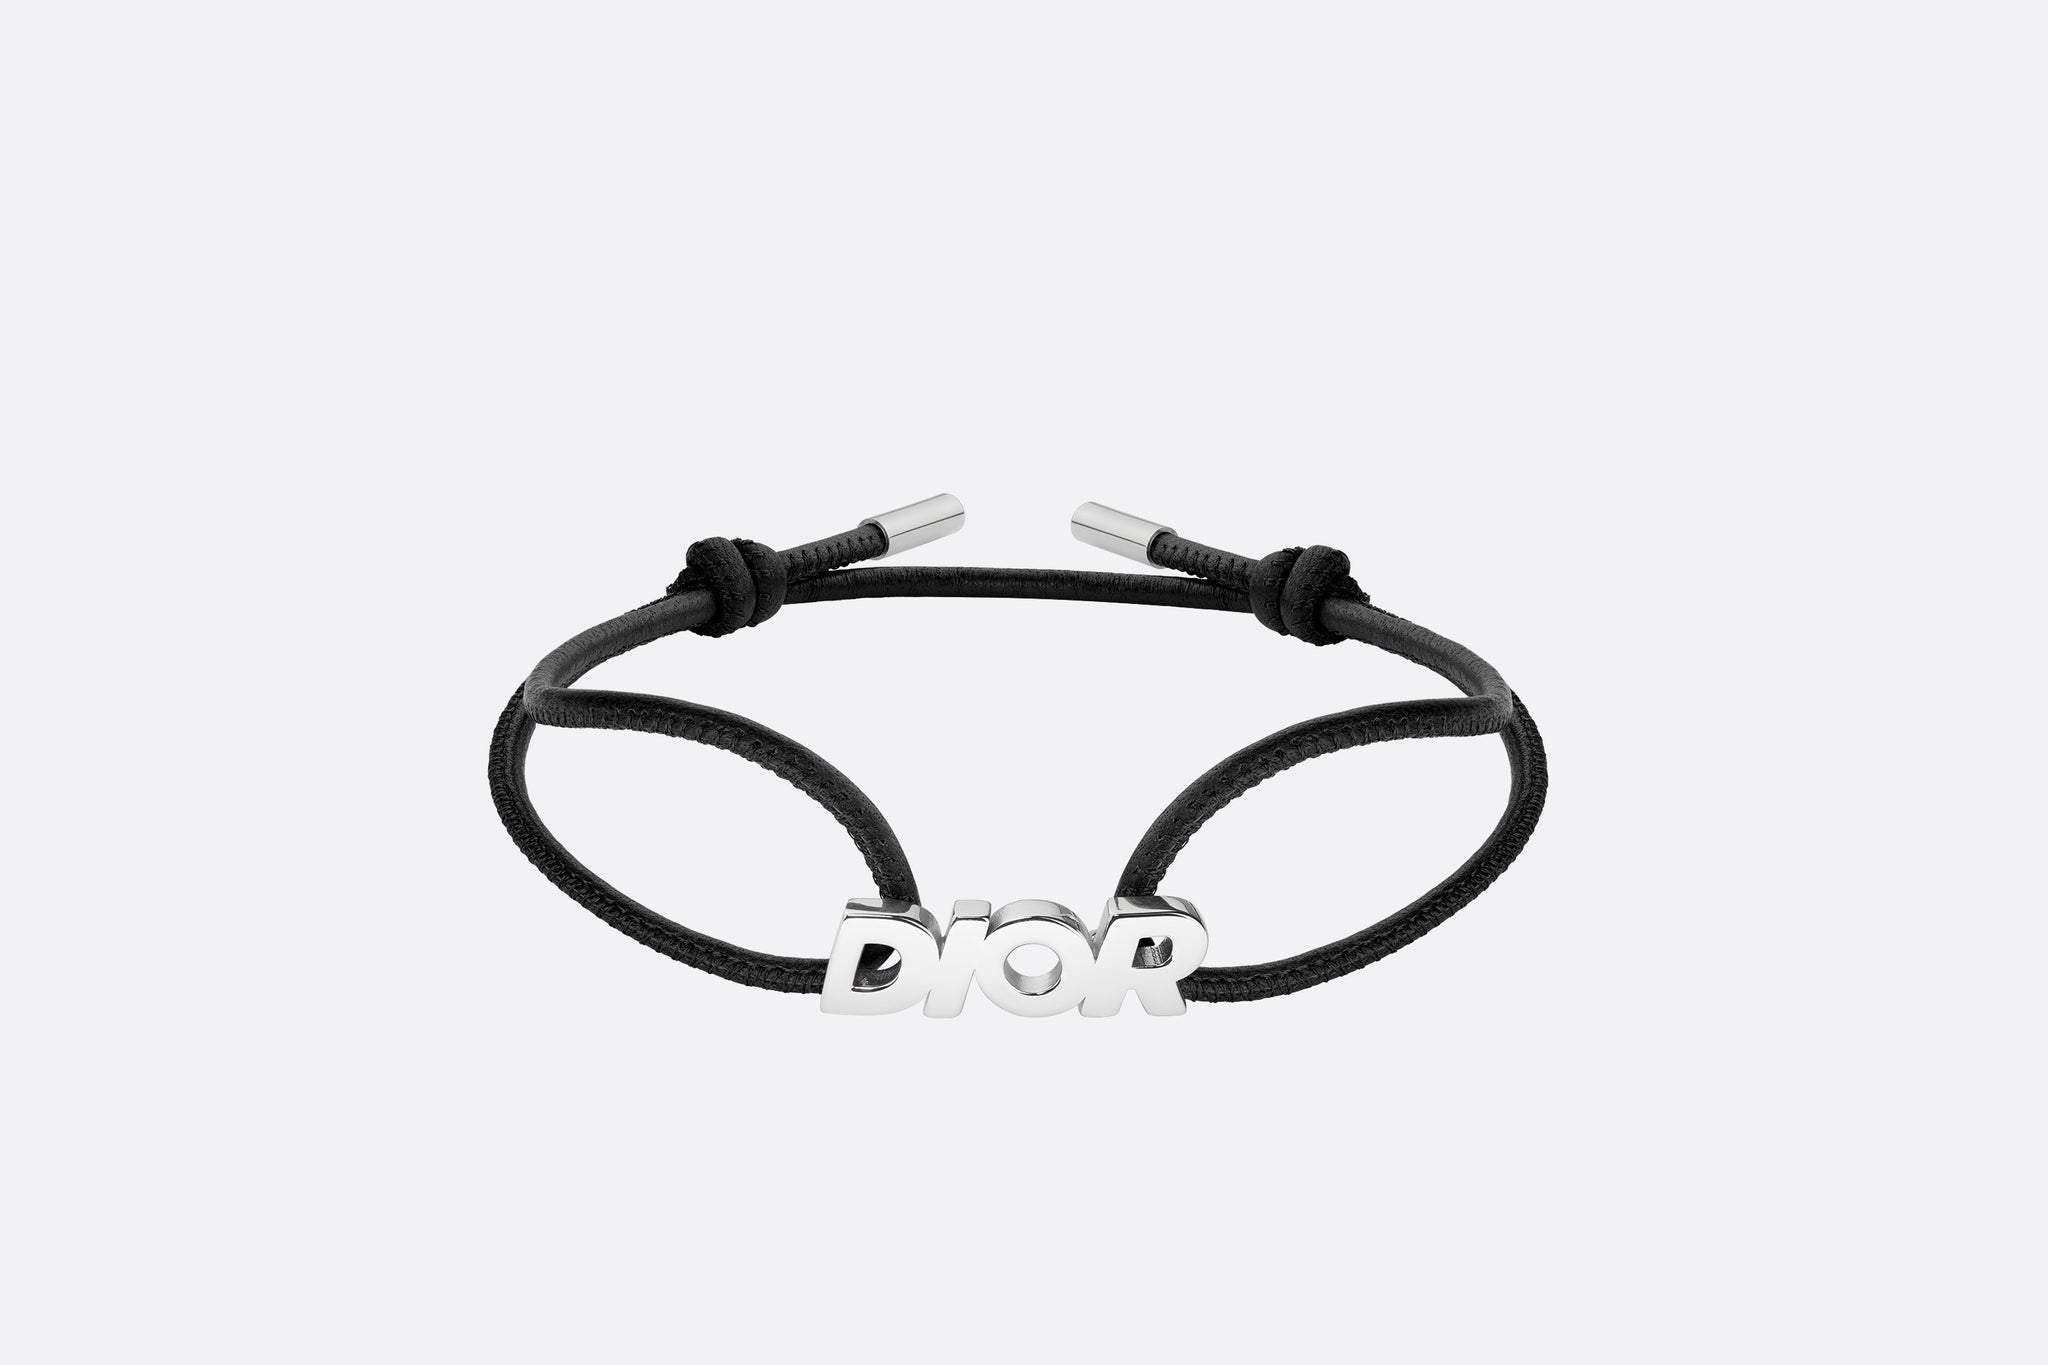 DIOR bracelet accessory LOGO DARK BLUE NEW VIP GIFT | eBay